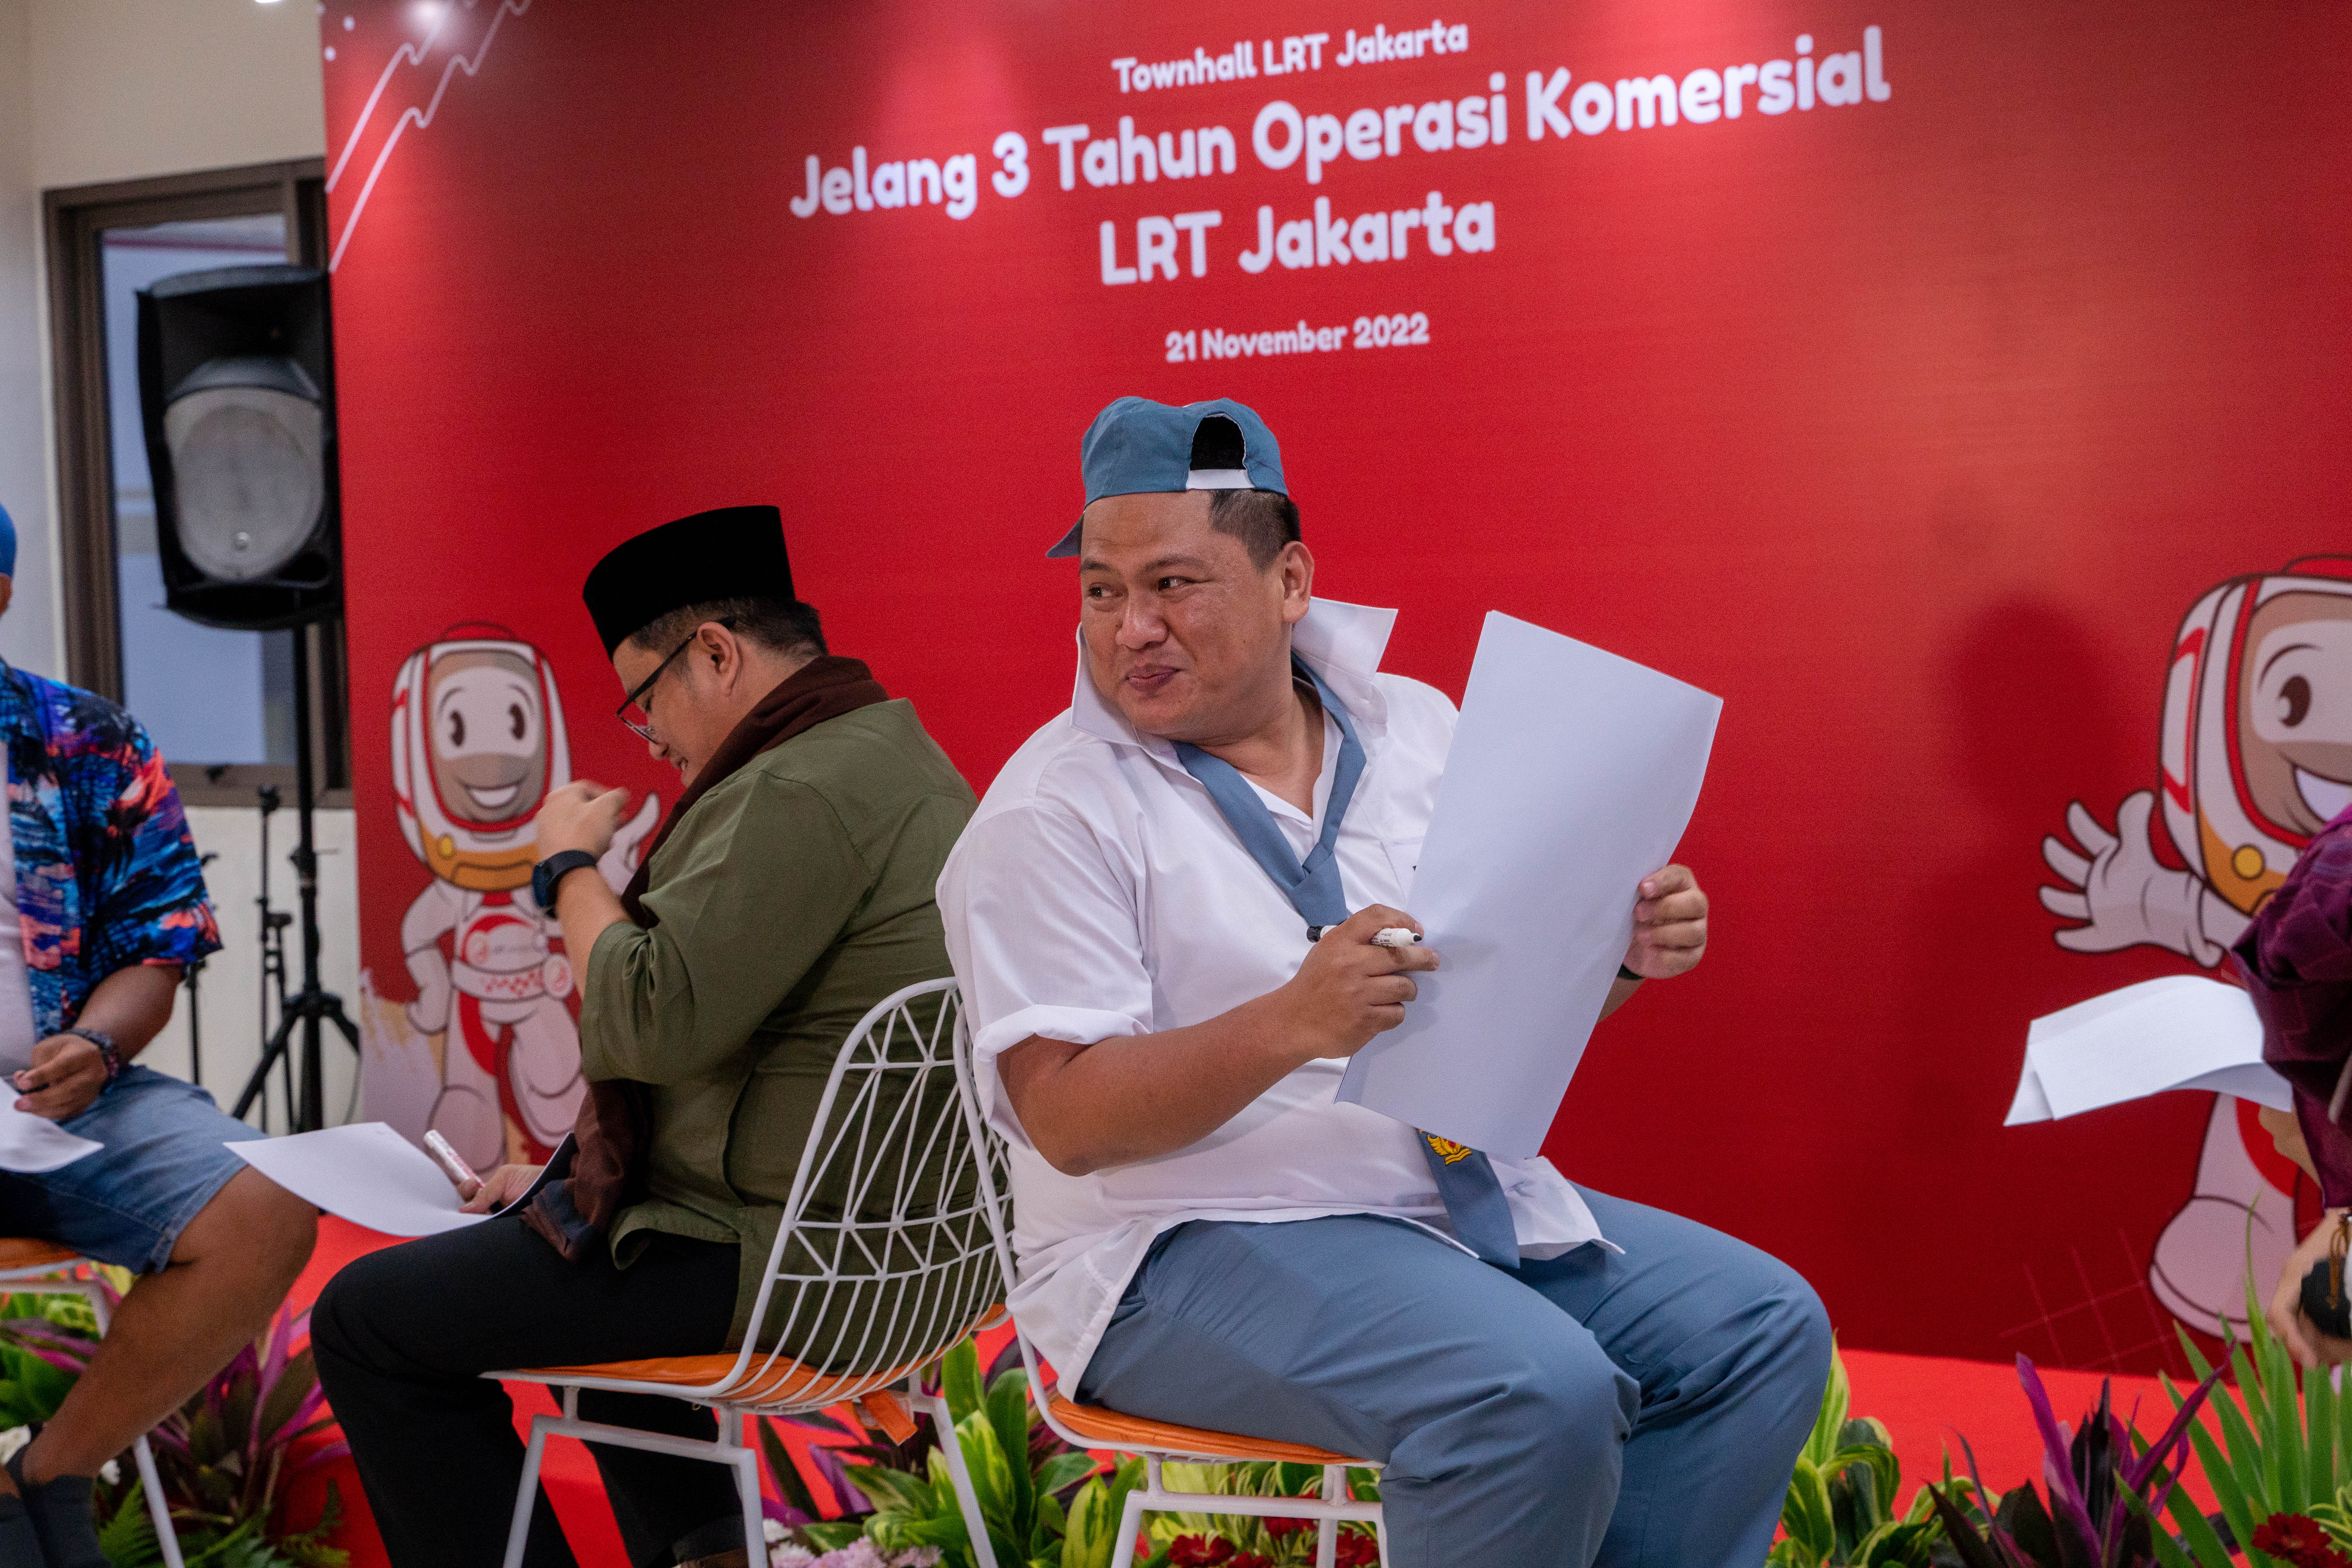 Townhall LRT Jakarta 2022